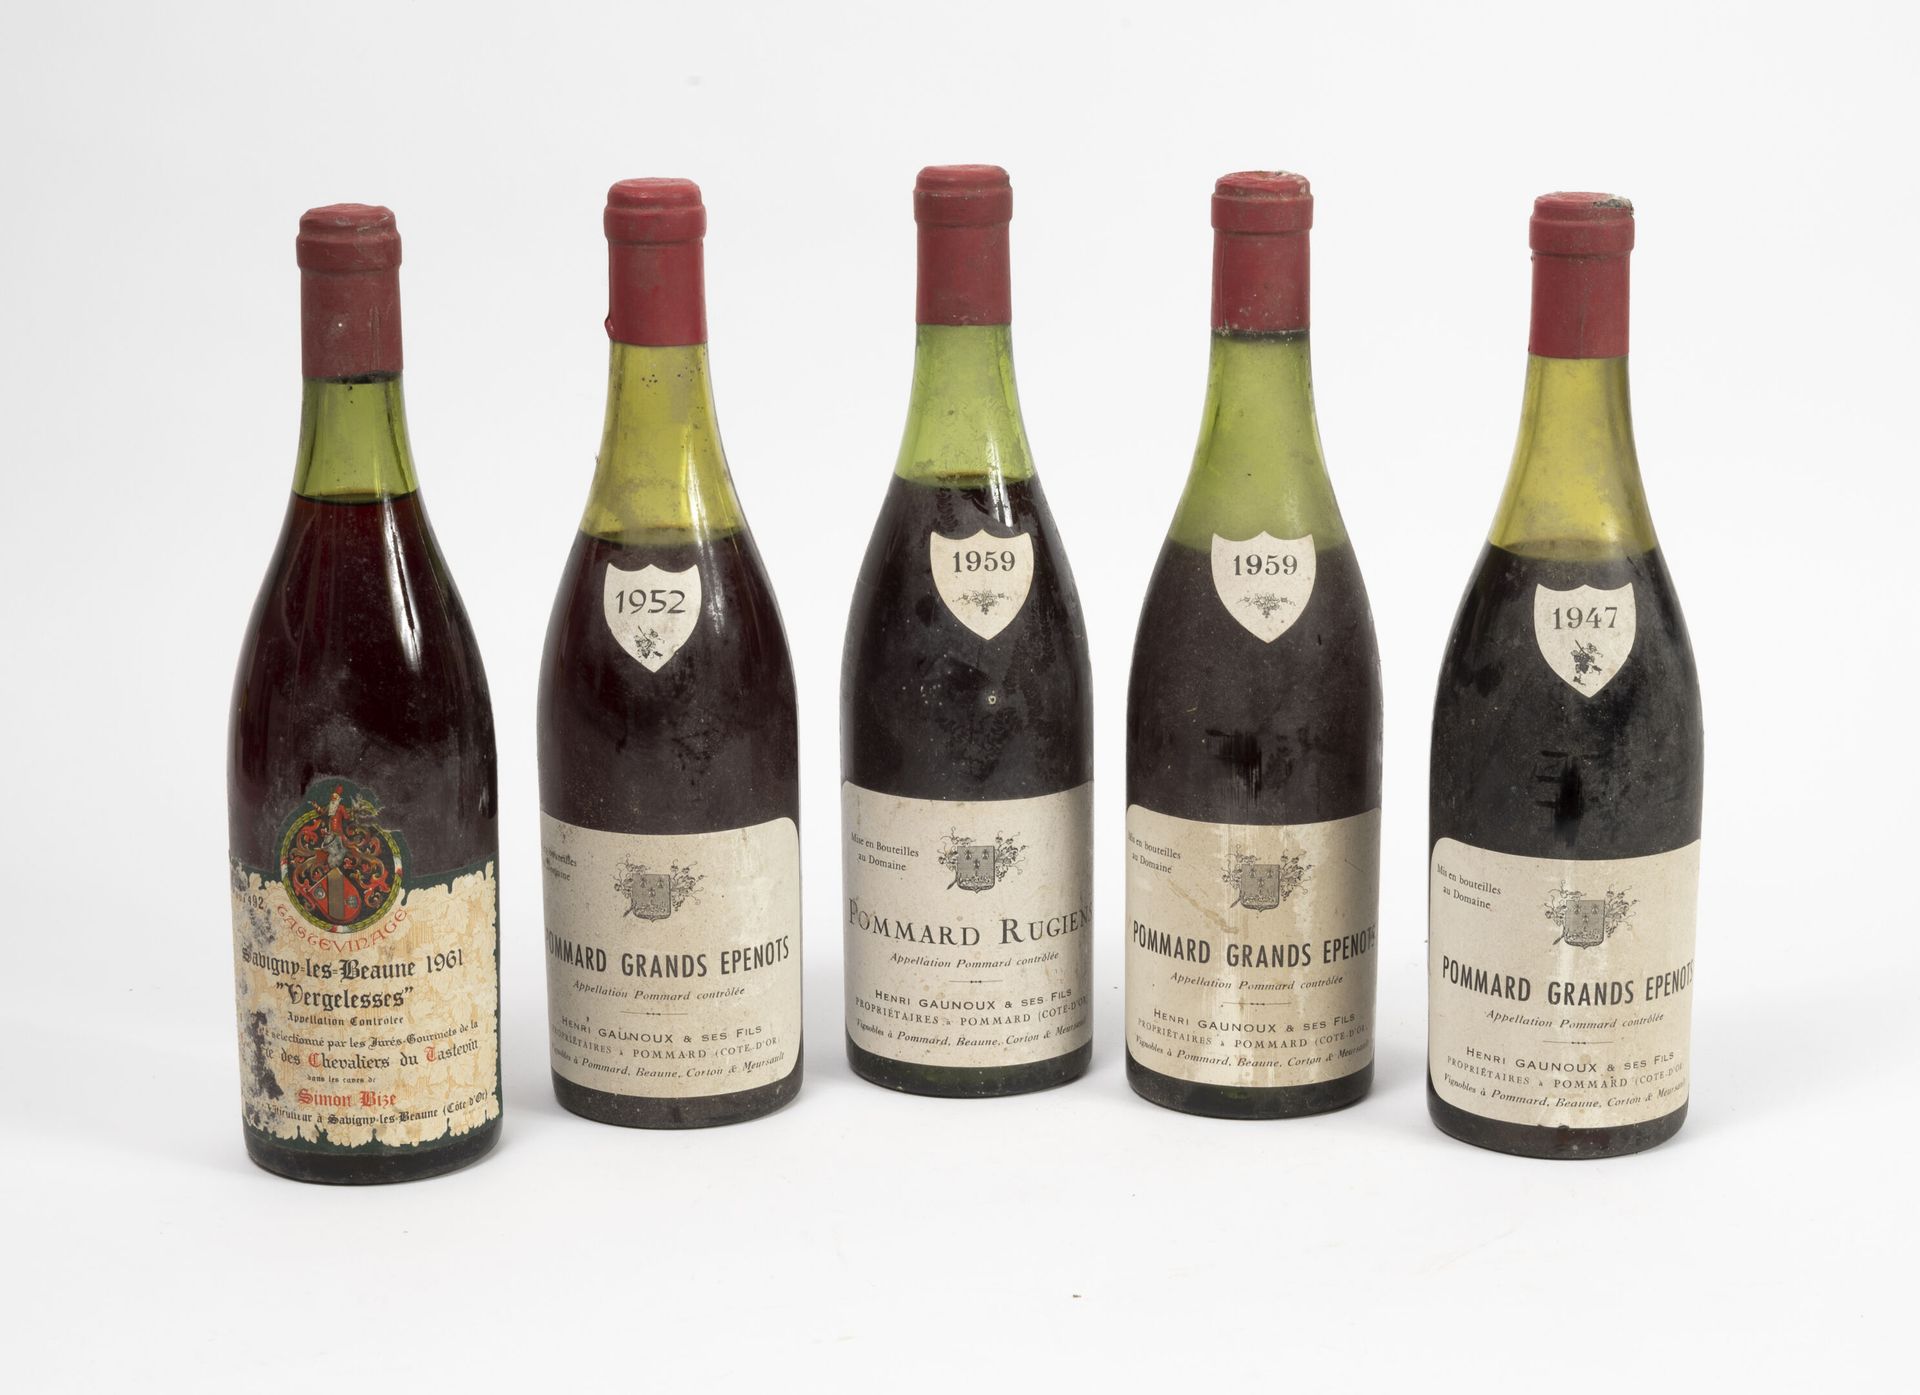 POMMARD GRANDS EPENOTS 1 bottle of 1947, 1 bottle of 1952 and 1 bottle of 1959.
&hellip;